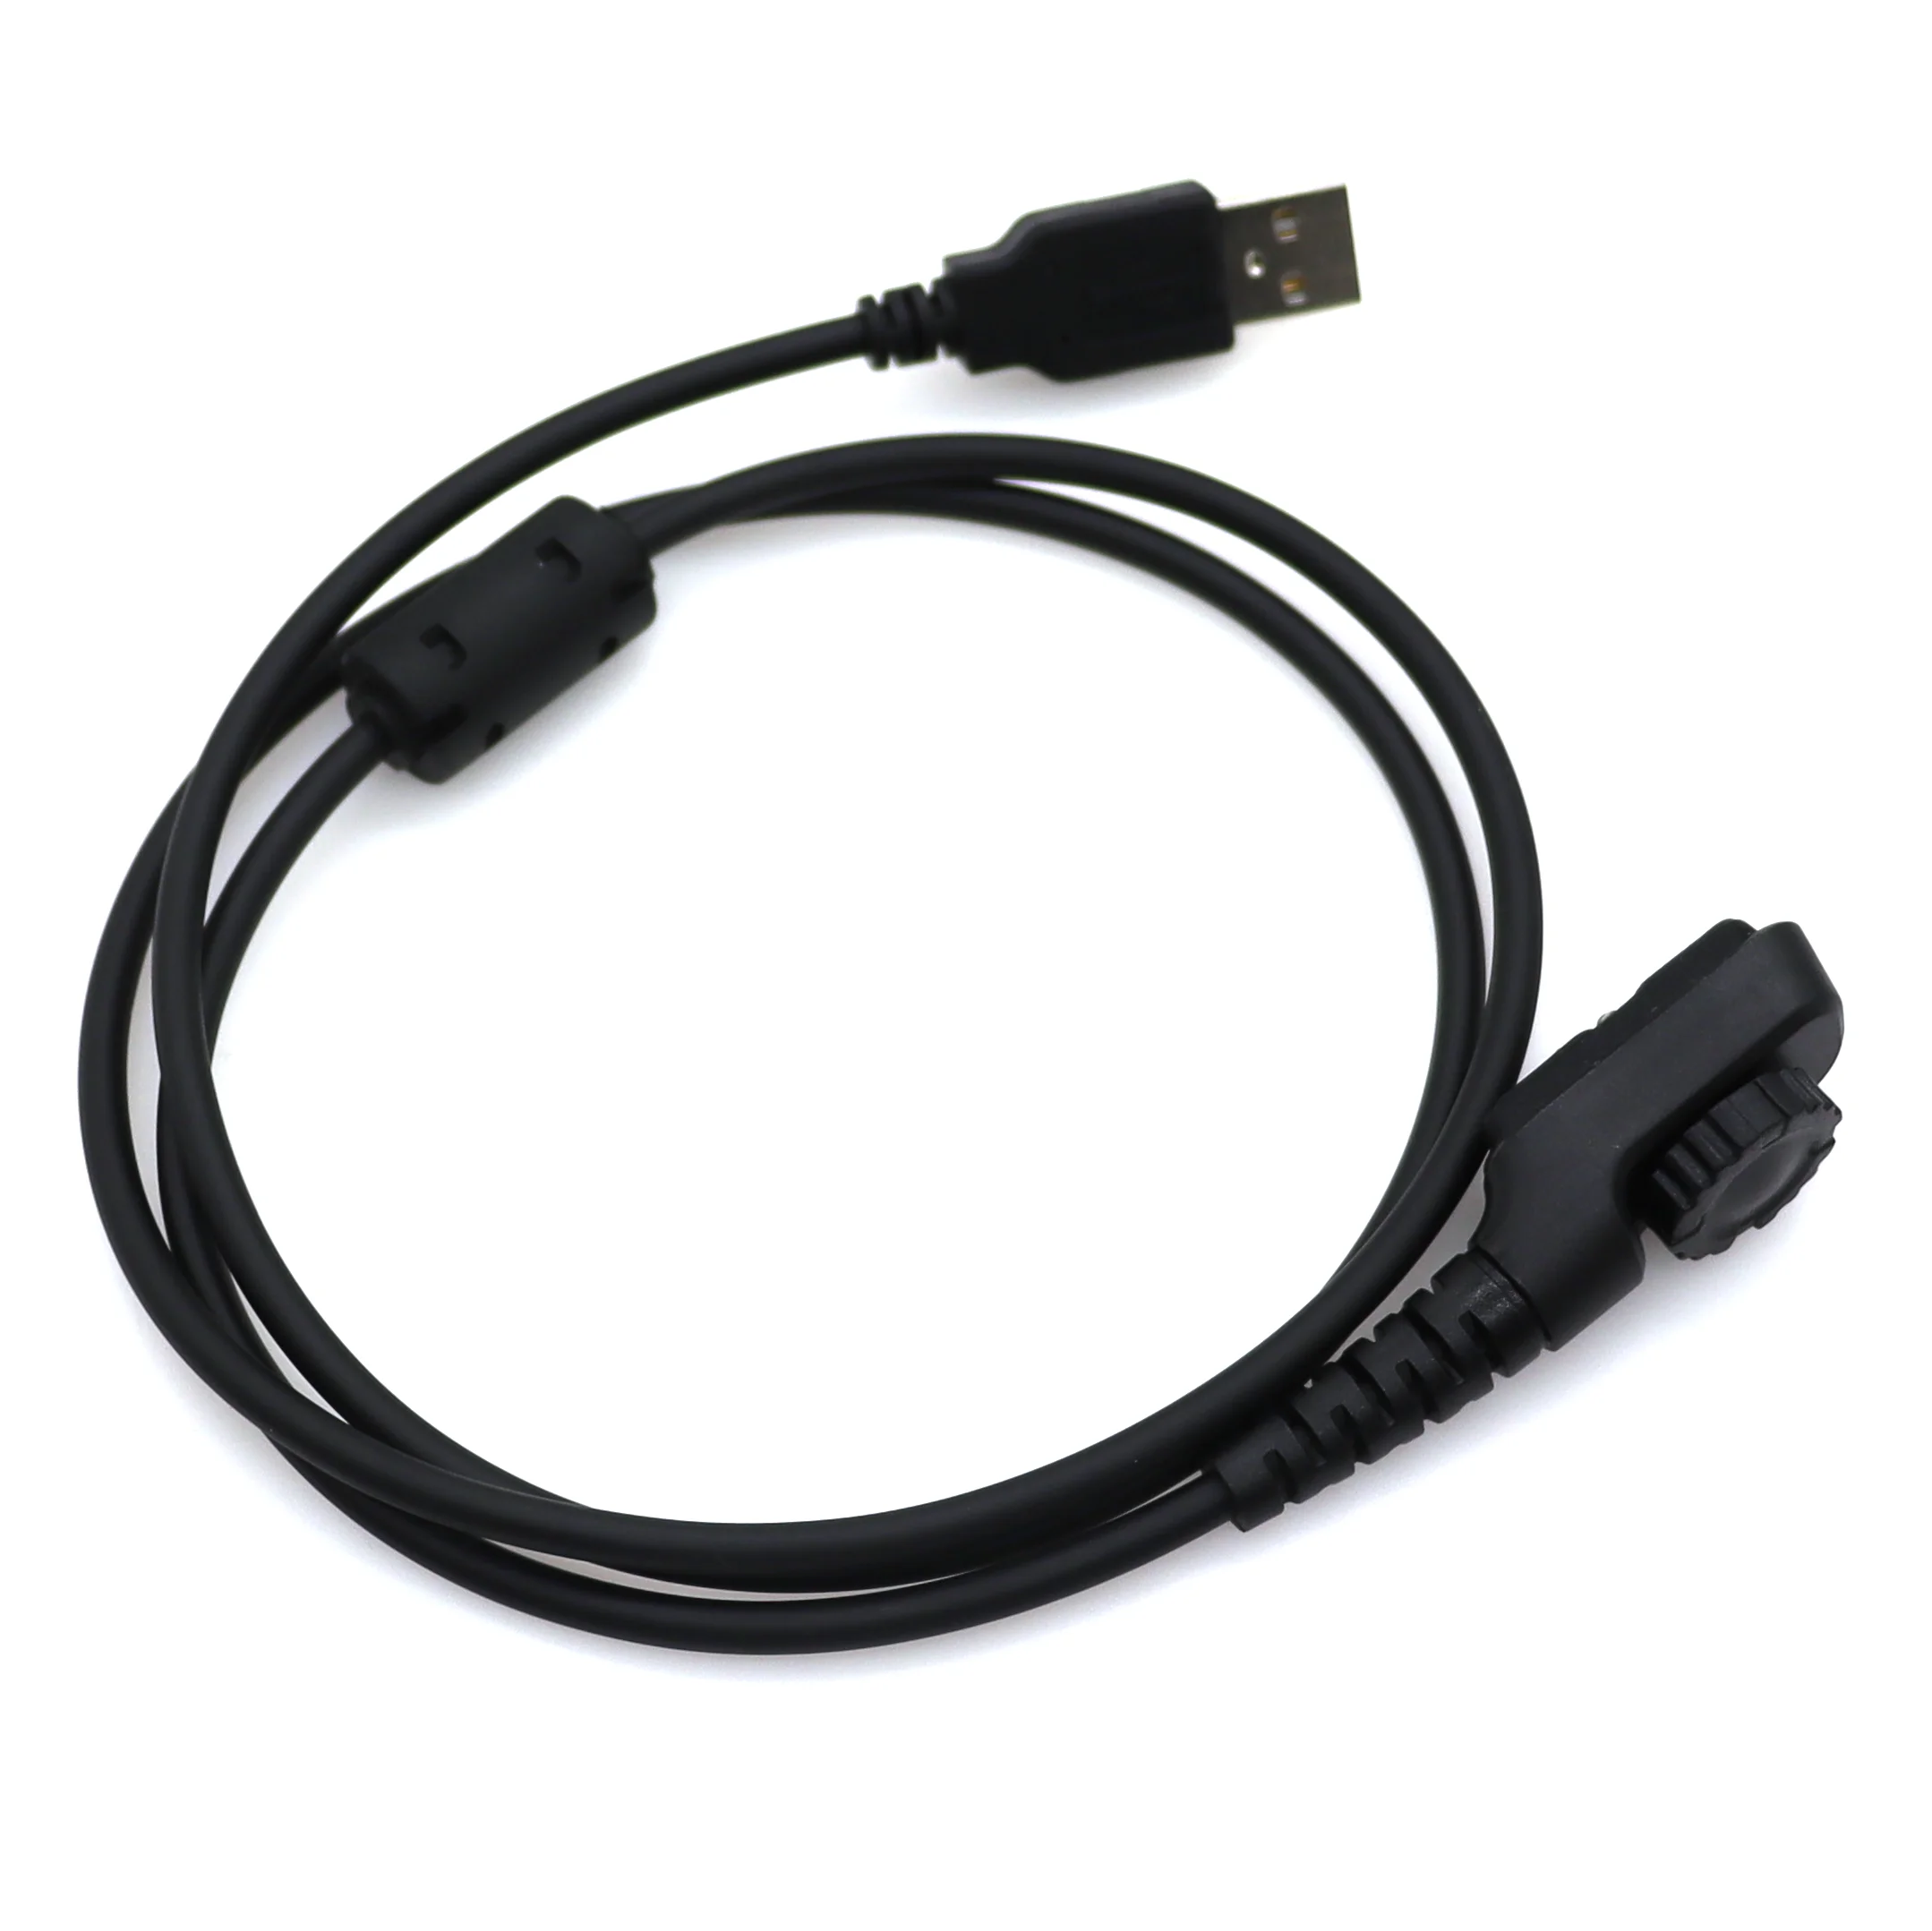 

Walkie talkie PC38 USB Programming Cable Lead for Hytera Radio PD705 PD705G PD785 PD785G PD795 PD985 PT580 PT580H PD782 PD702